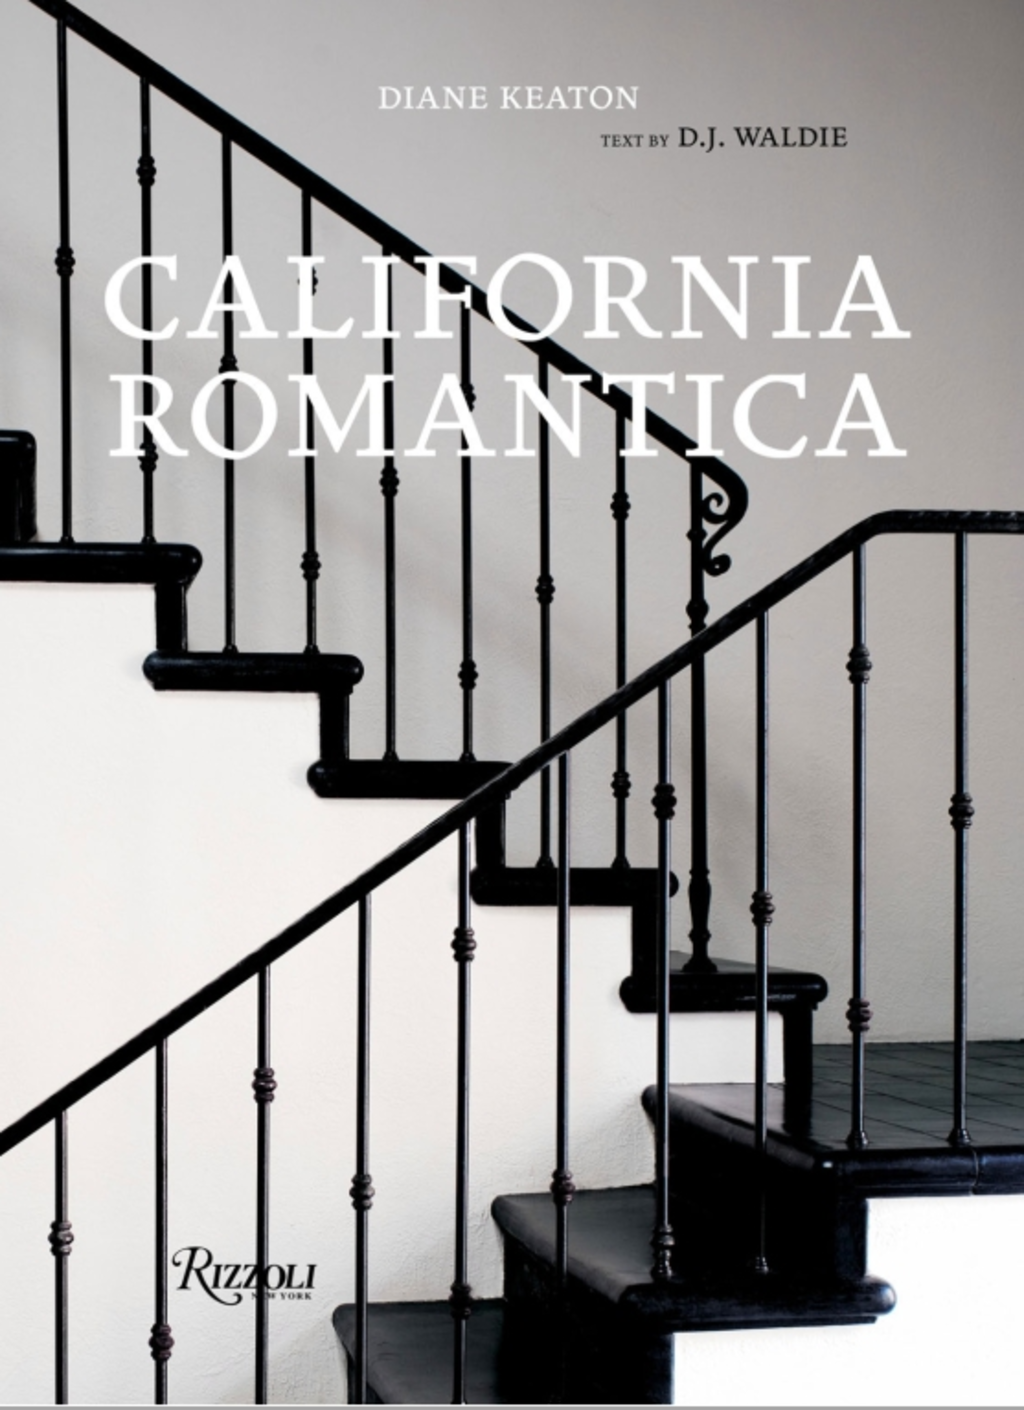 California Romantica by Diane Keaton Photo: Supplied